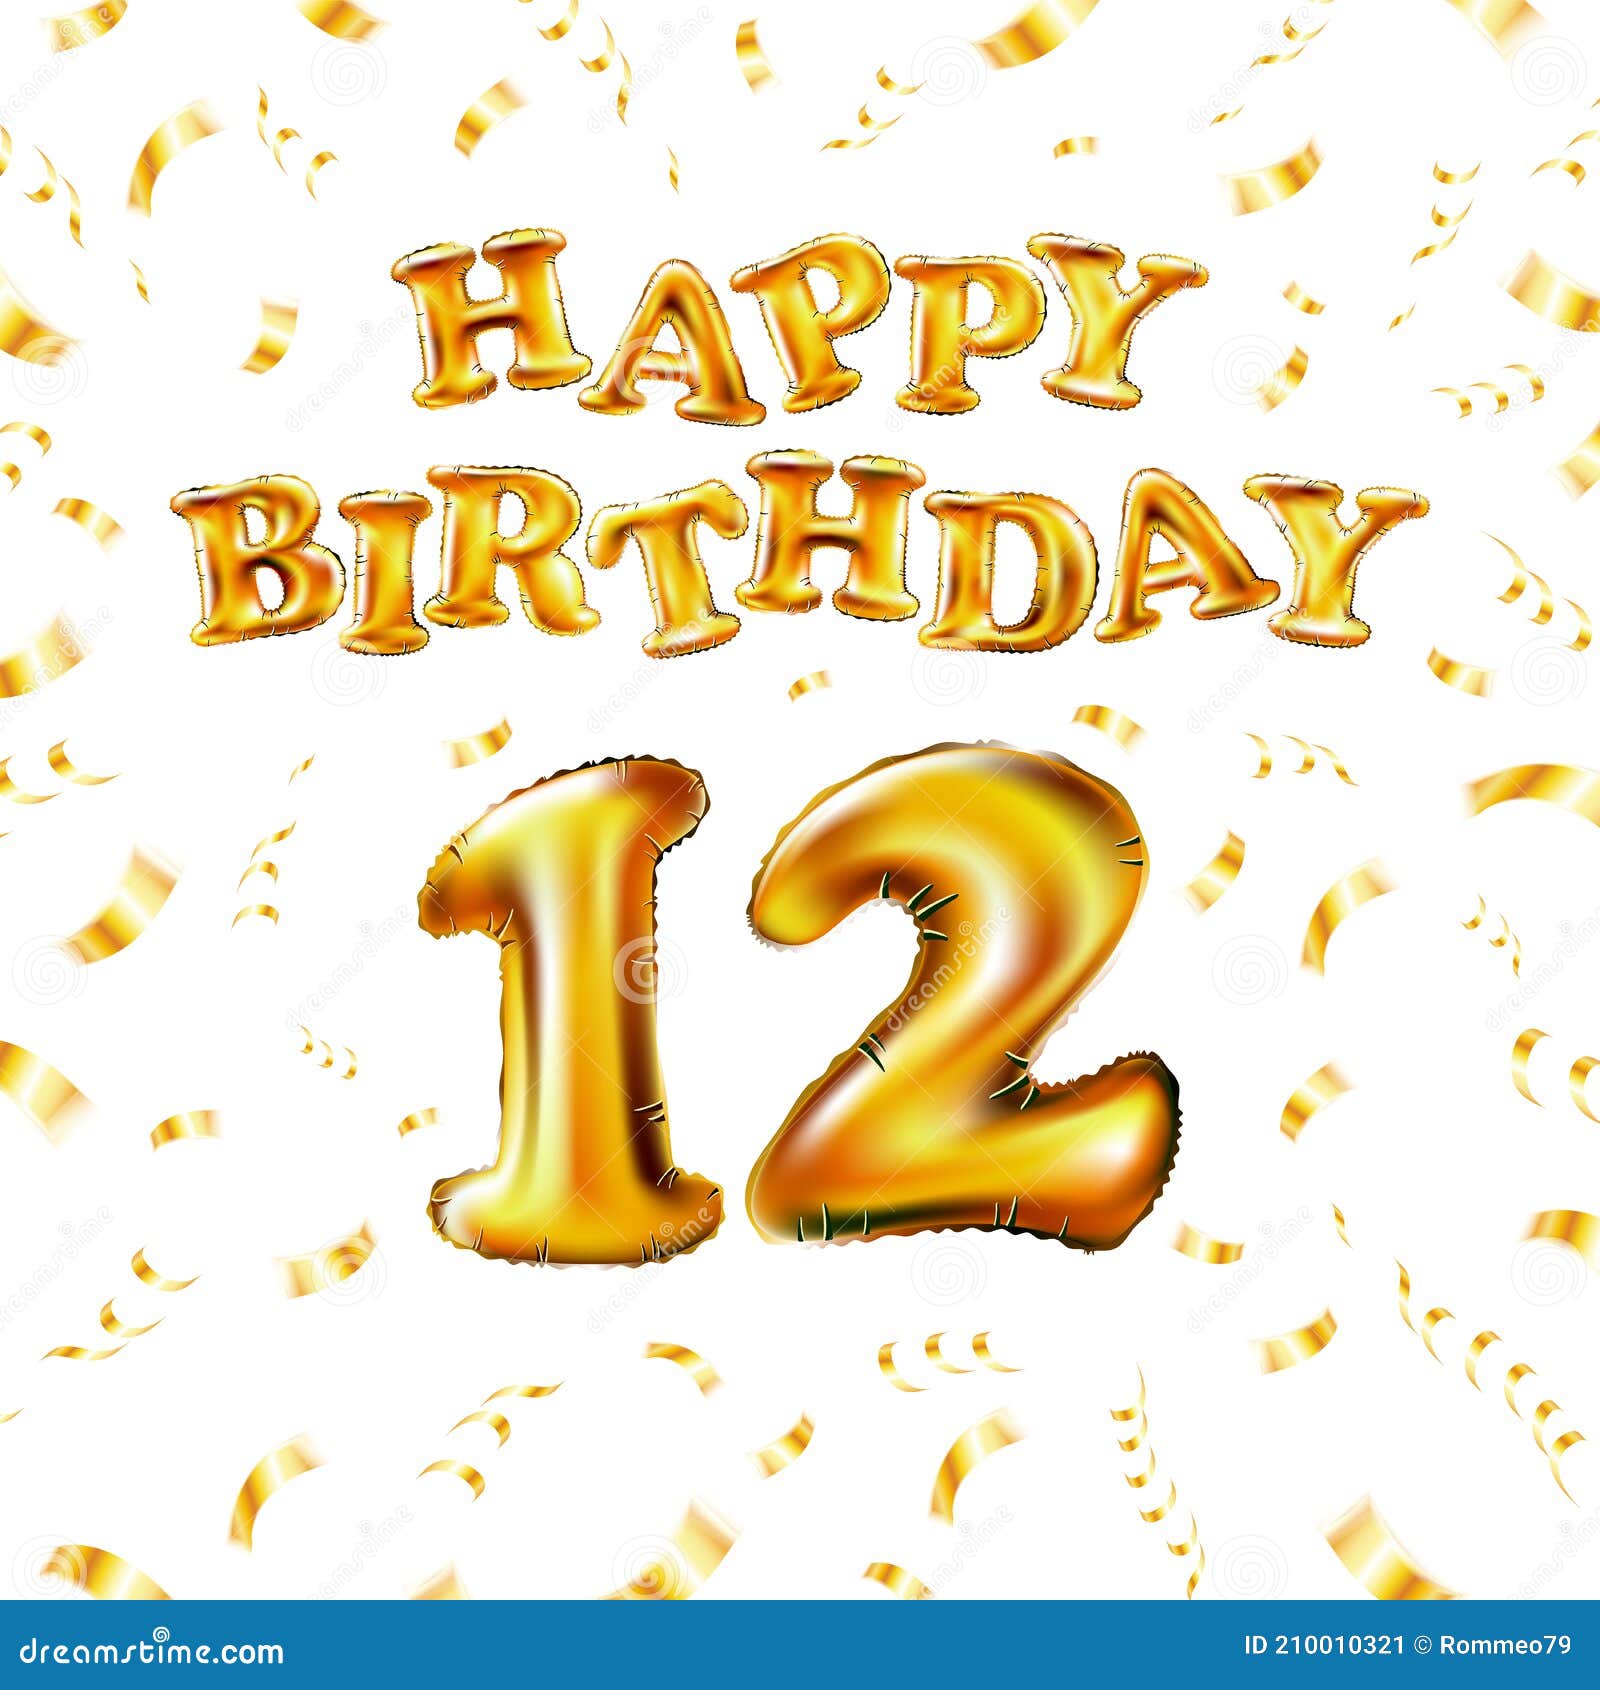 12 Happy Birthday Message Made of Golden Inflatable Balloon Twelve ...